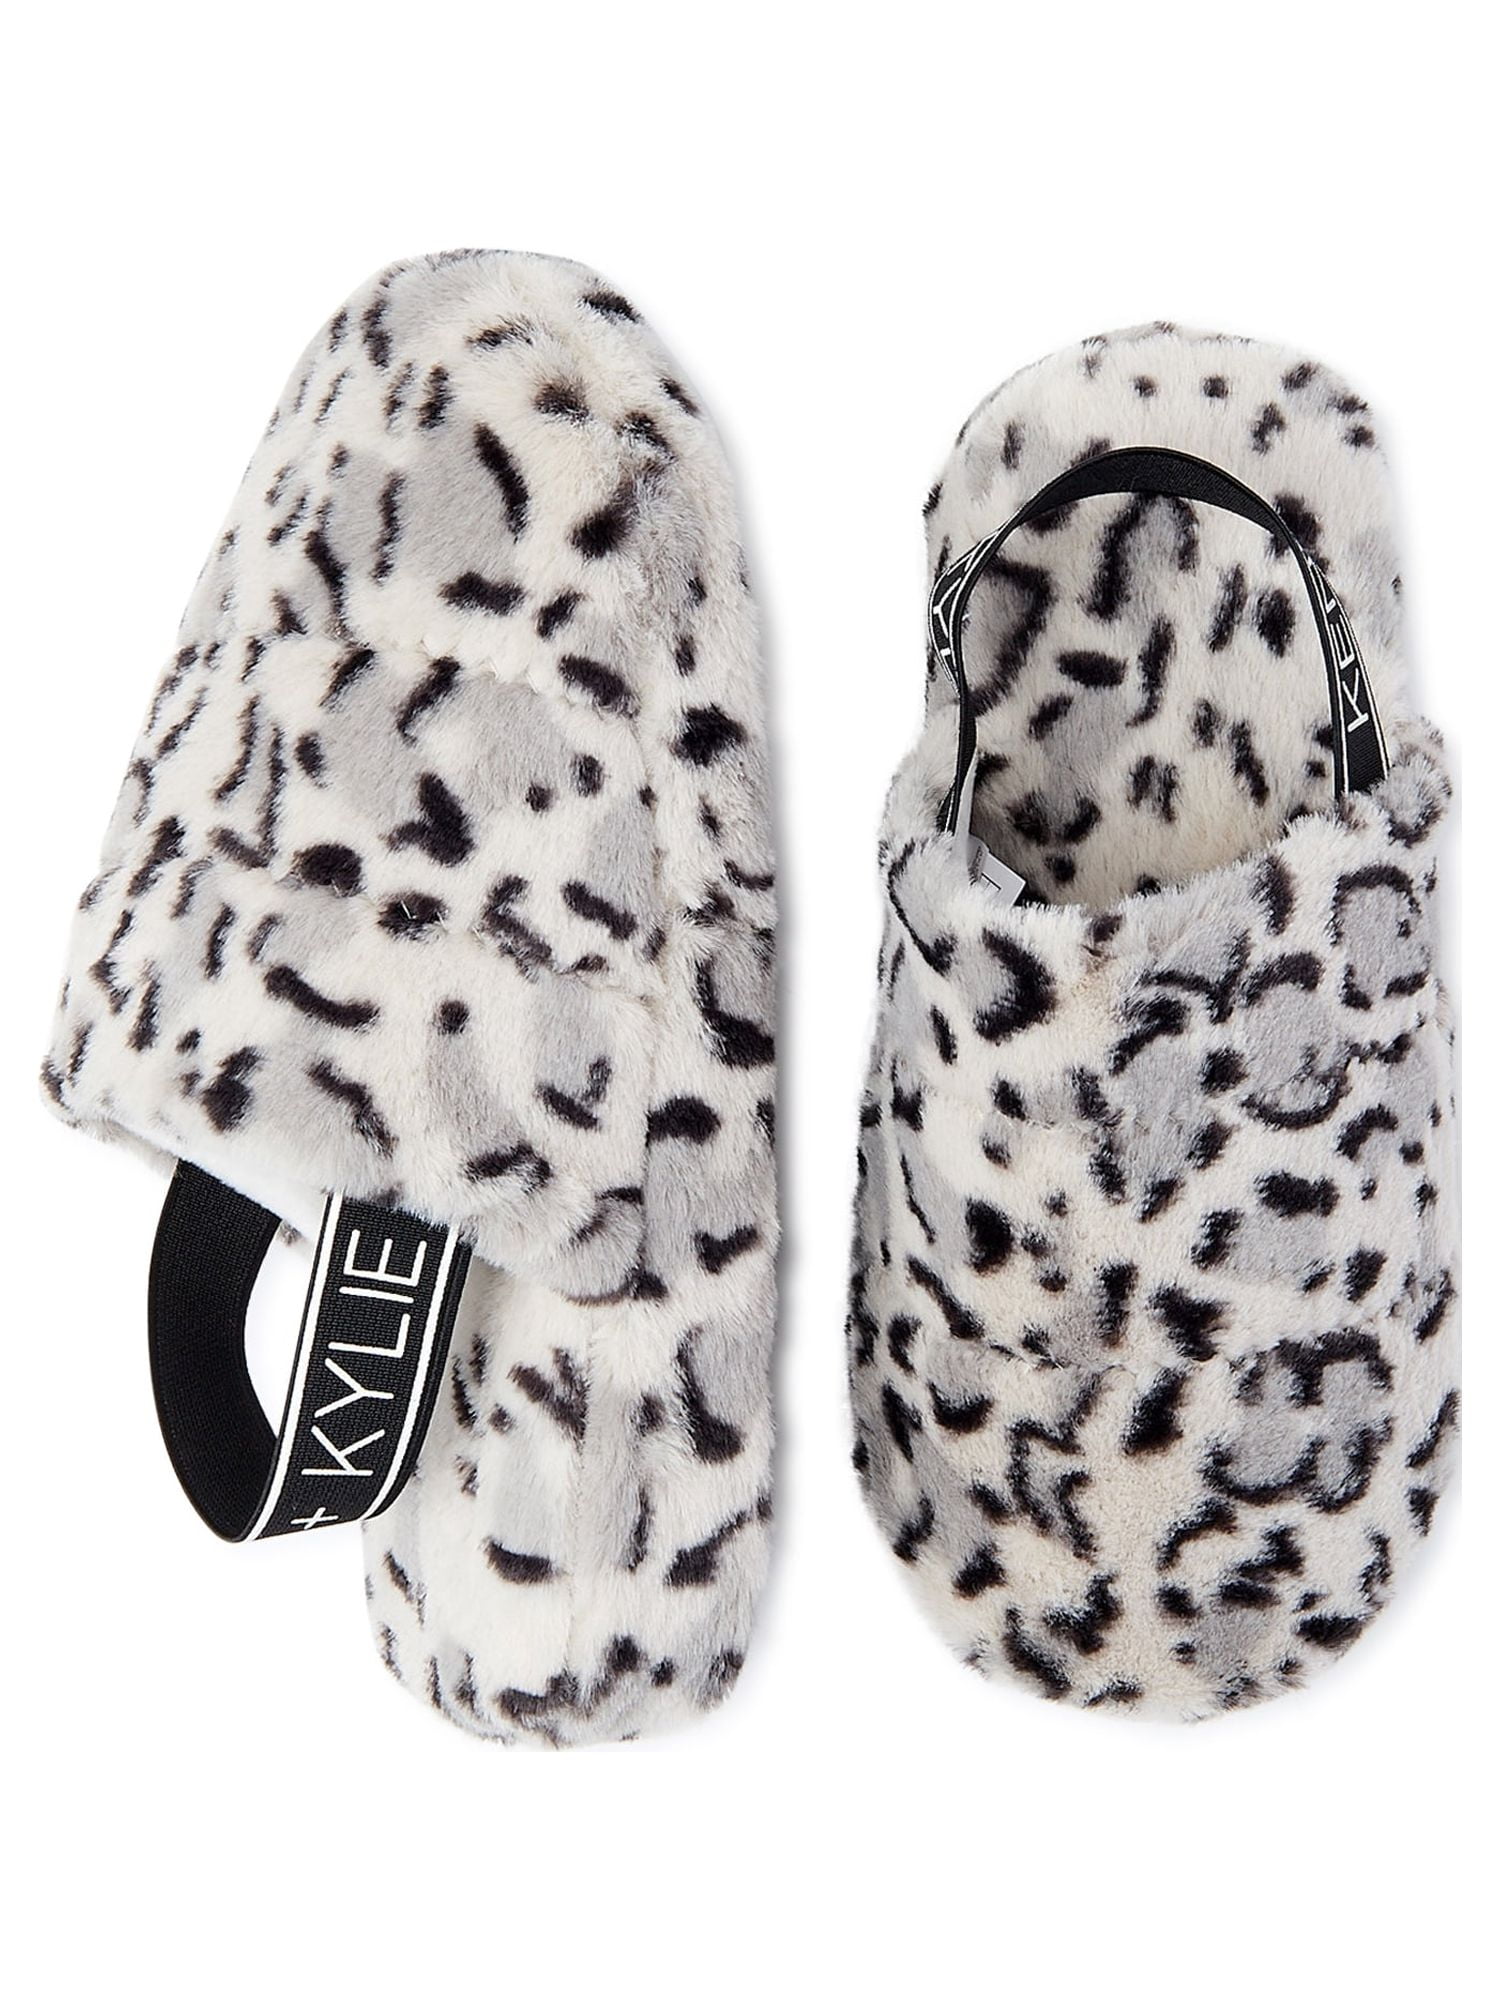 Kendall + Kylie Women's Sade Faux Fur Slide Slippers 